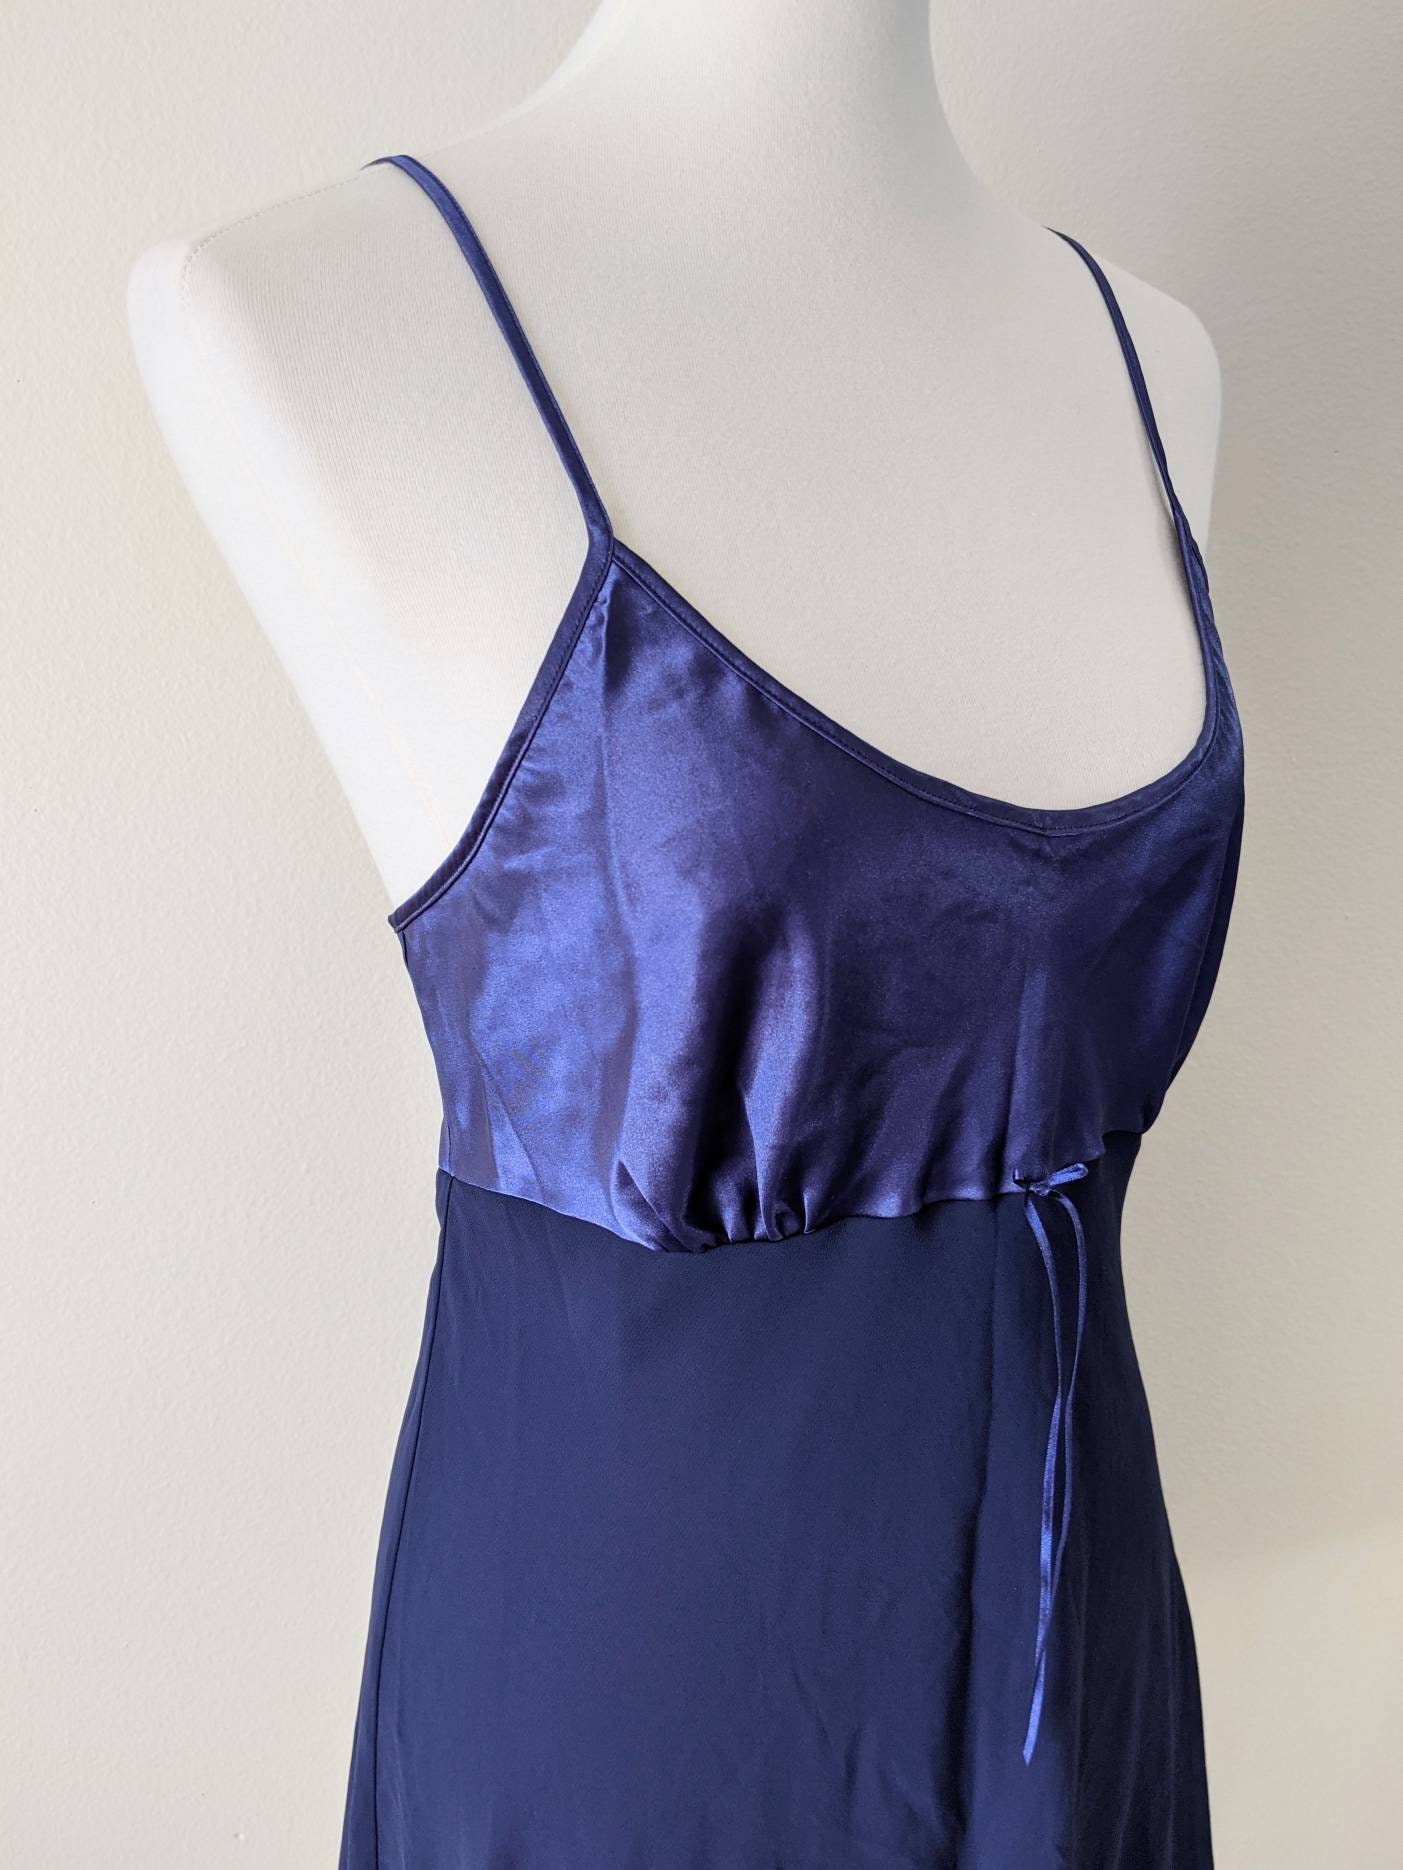 Babydoll Nightgown Blue Gift for Her Nightwear Elegant by | Etsy